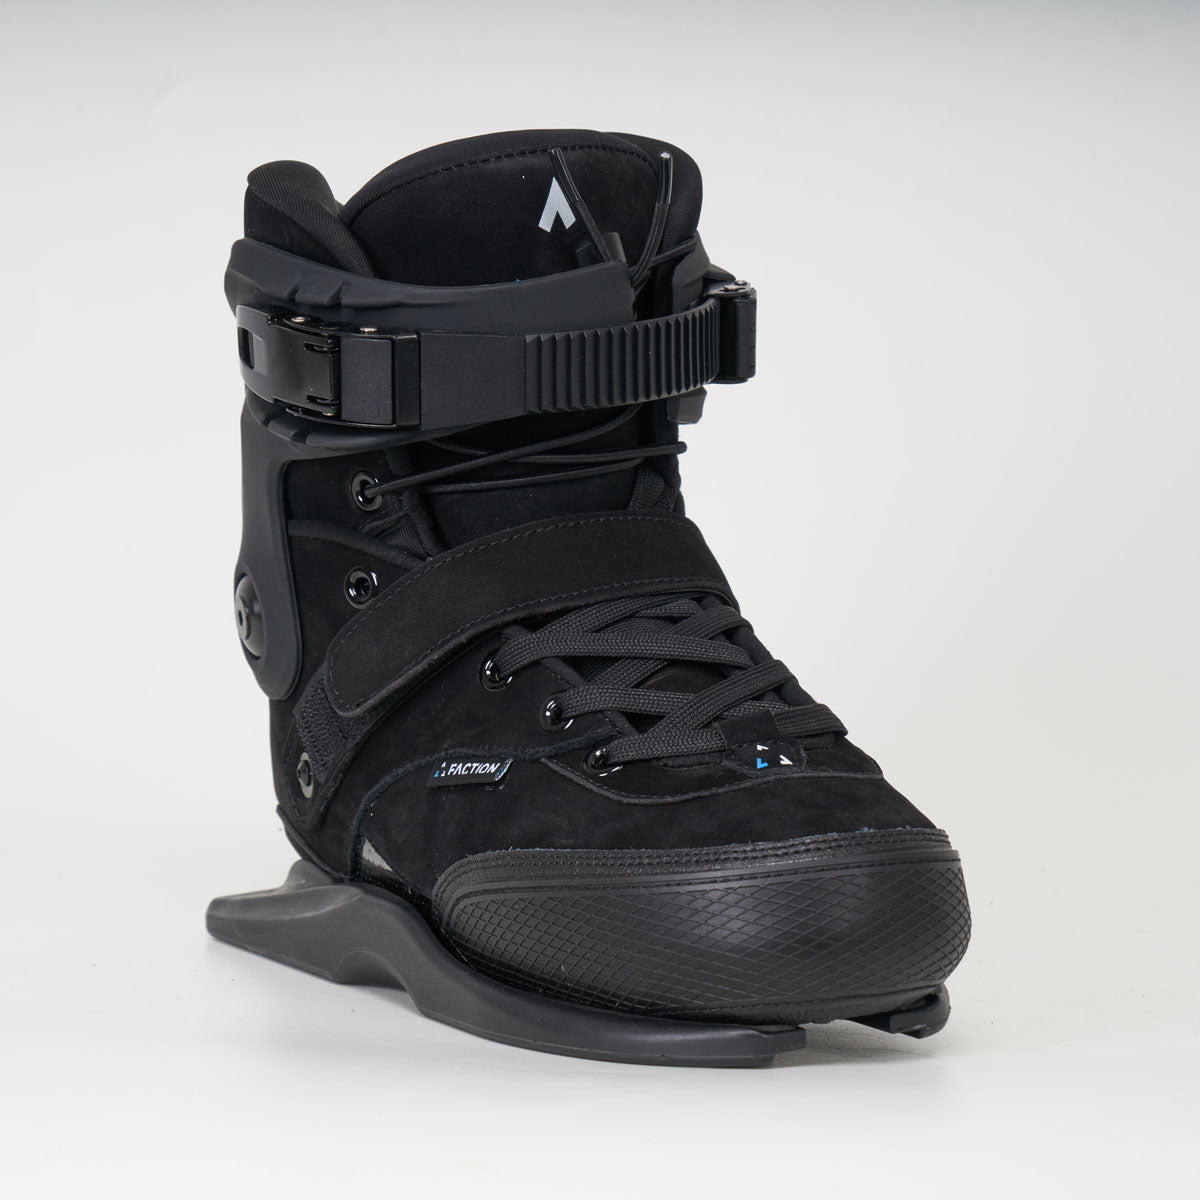 Faction Tactical V1 Midnight Skates - Black – Boot only